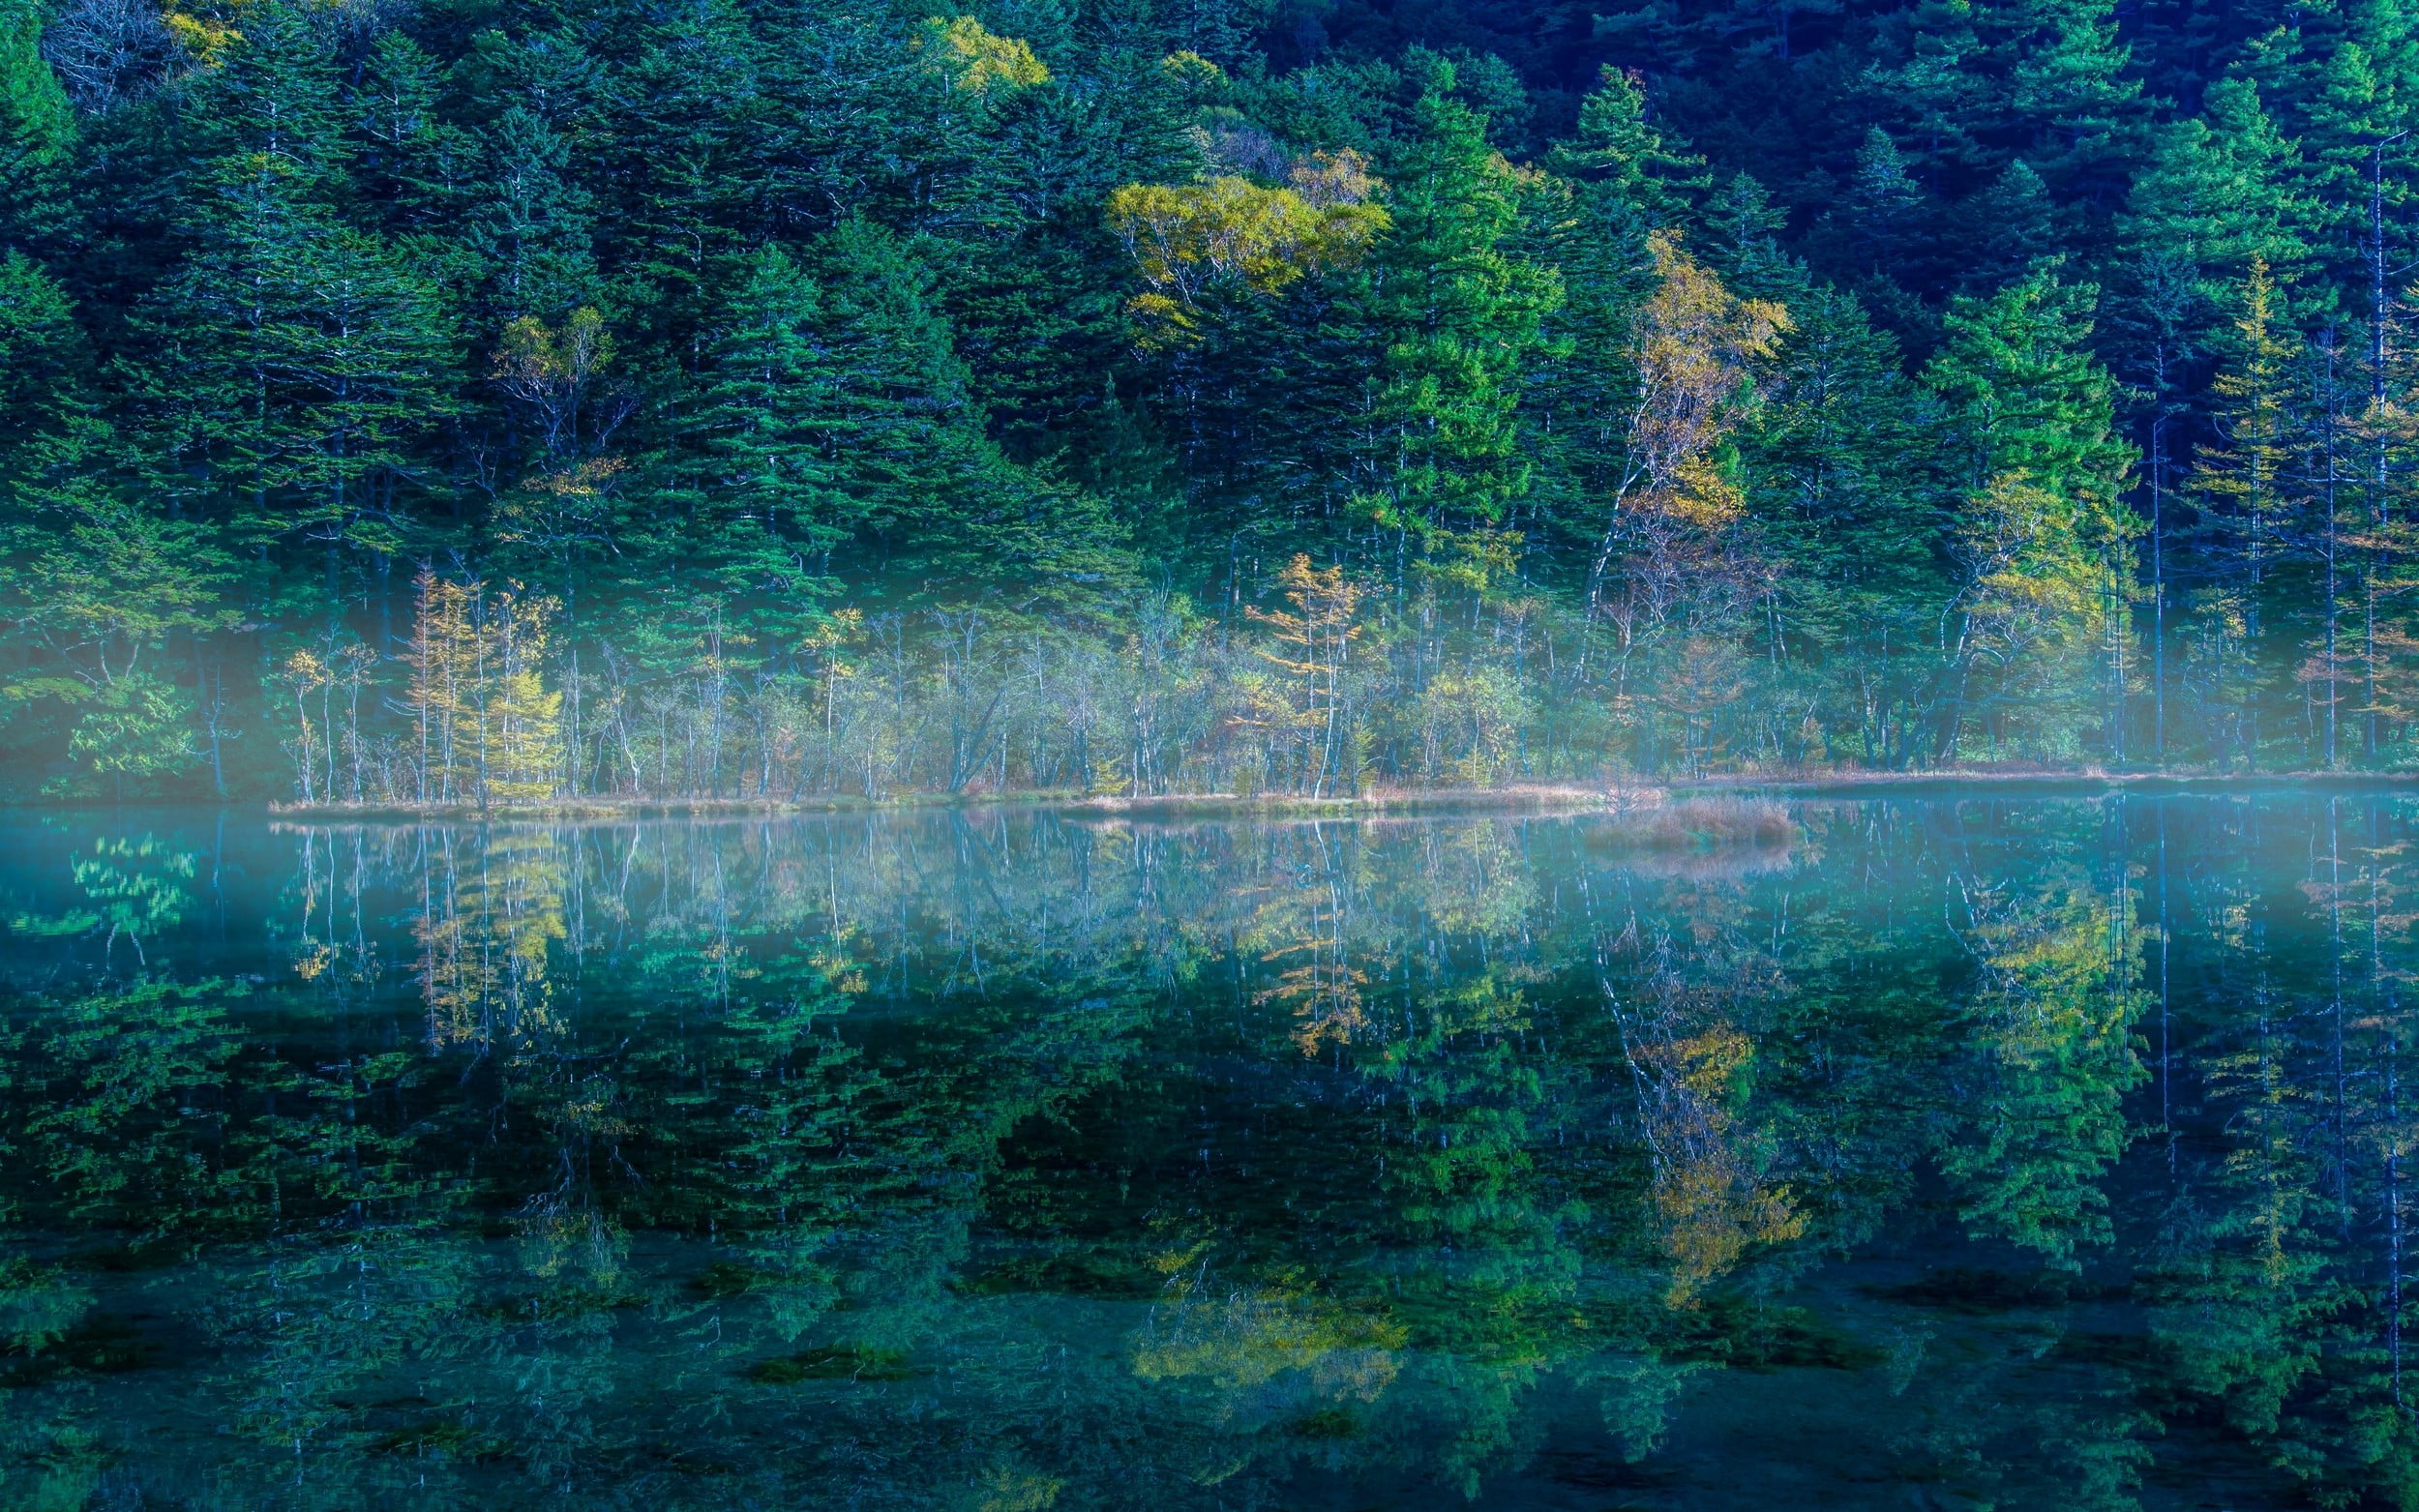 nature, landscape, lake, reflection